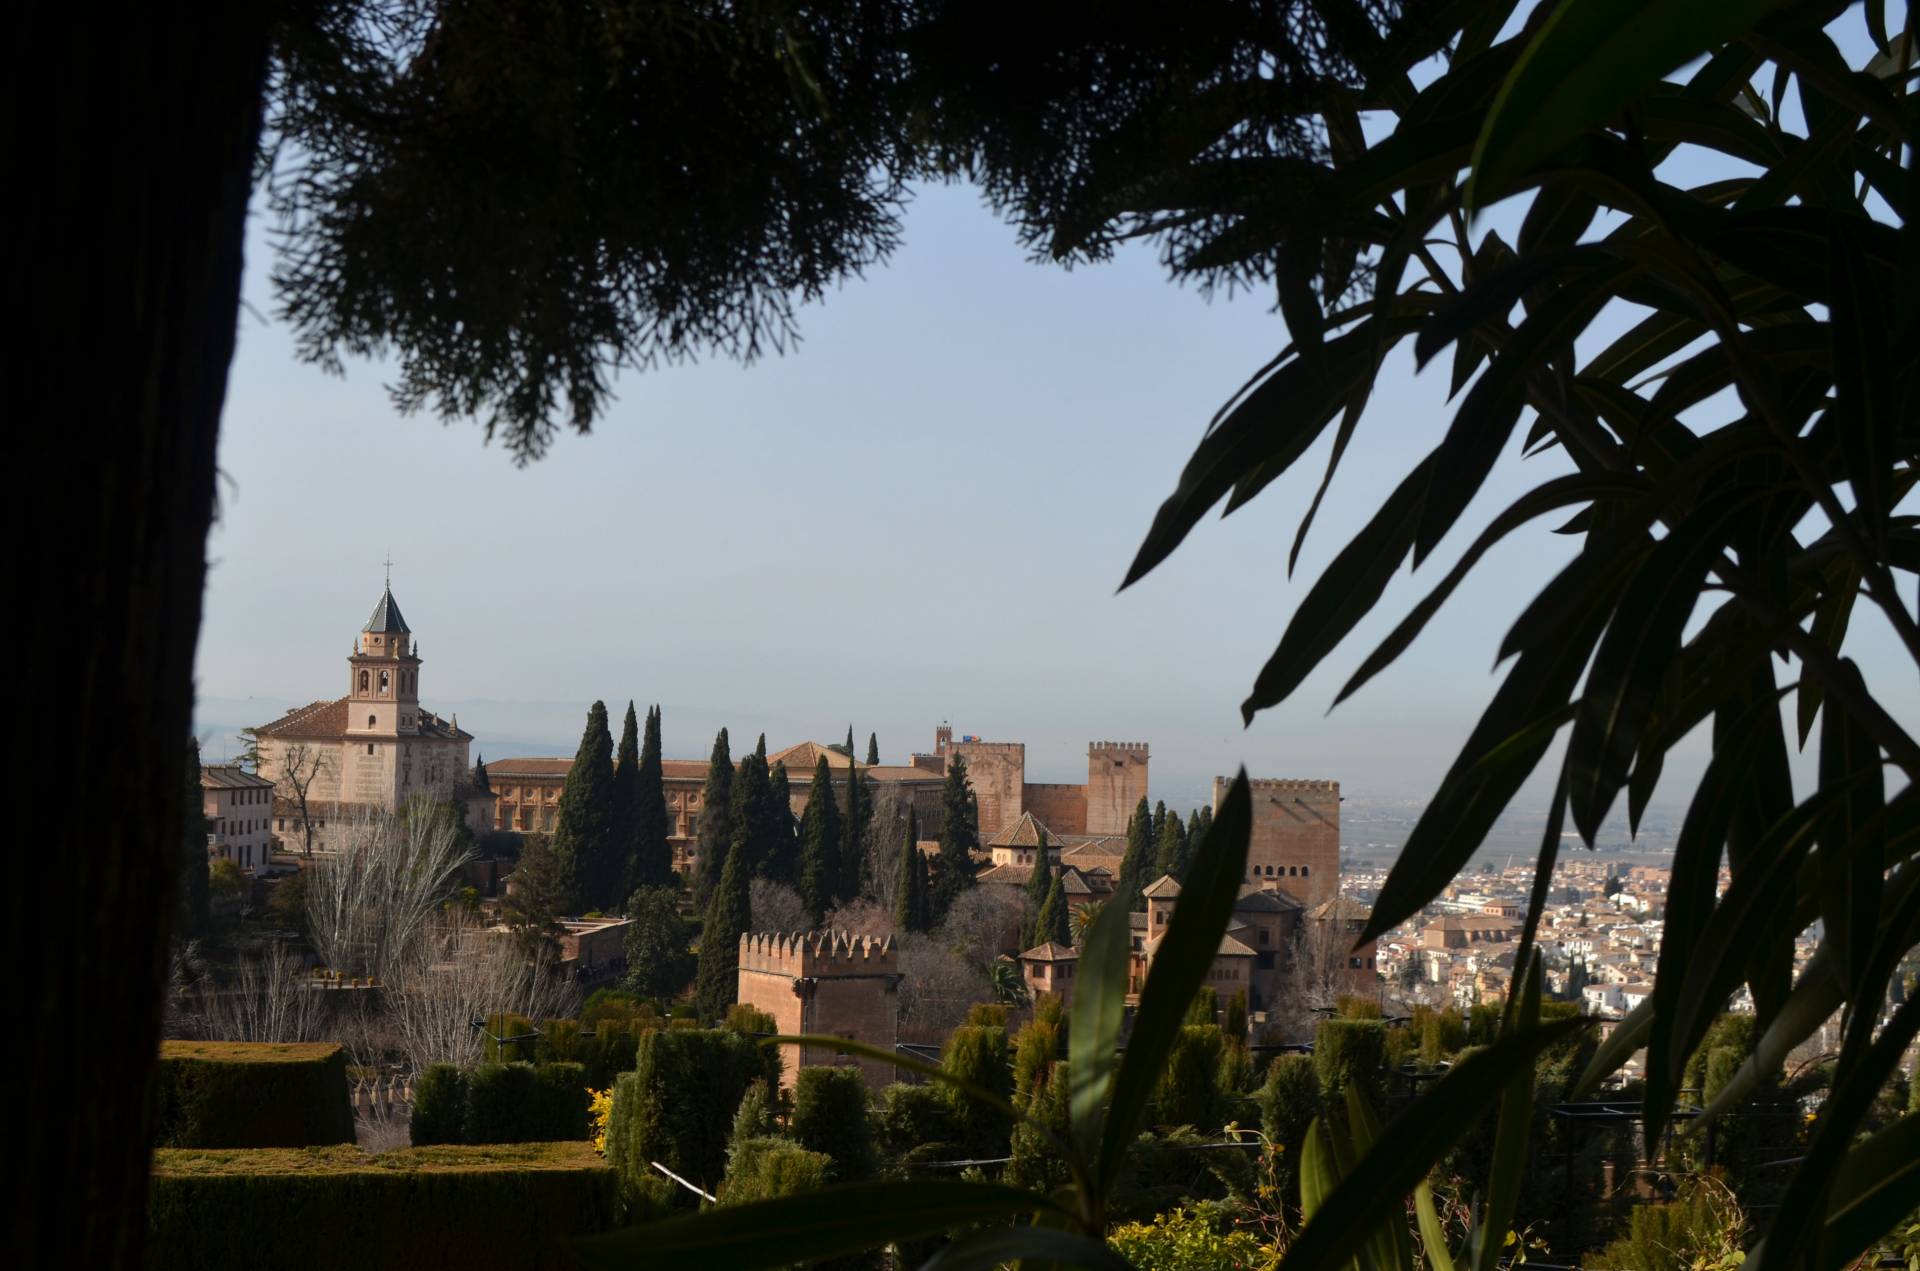 "Alhambra Through the Trees" (Granada, Spain)